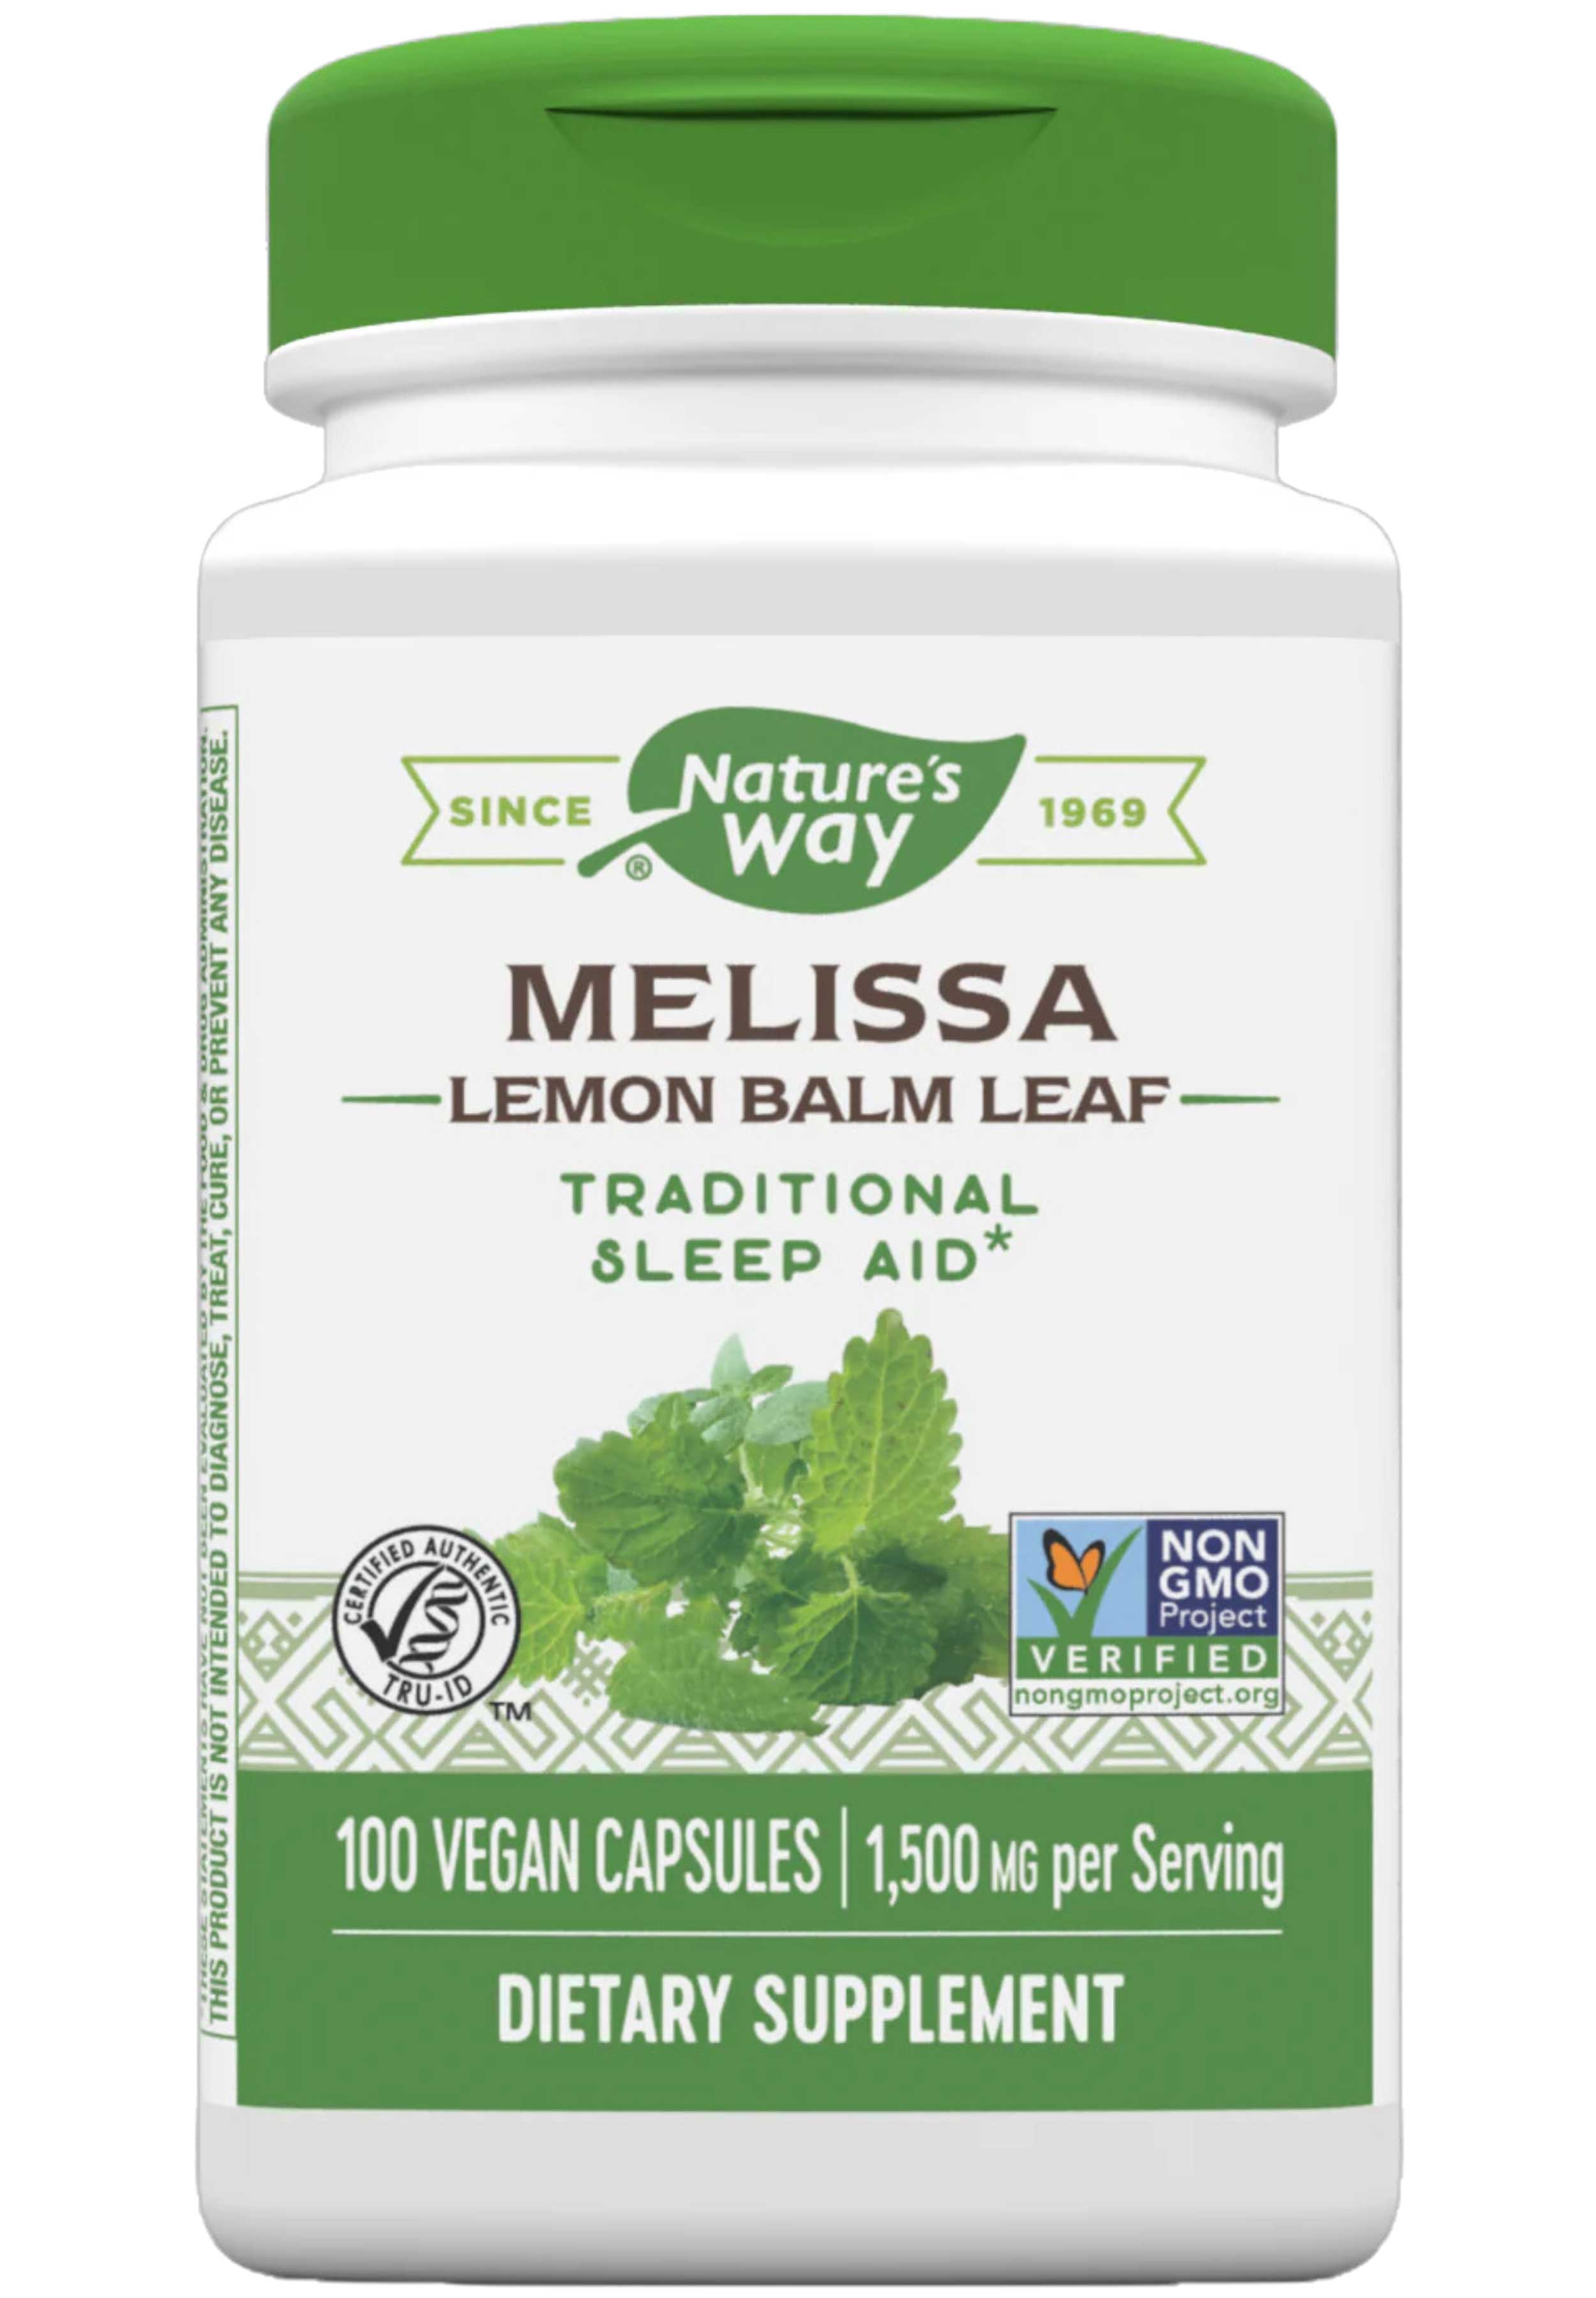 Nature's Way Melissa Lemon Balm Leaf